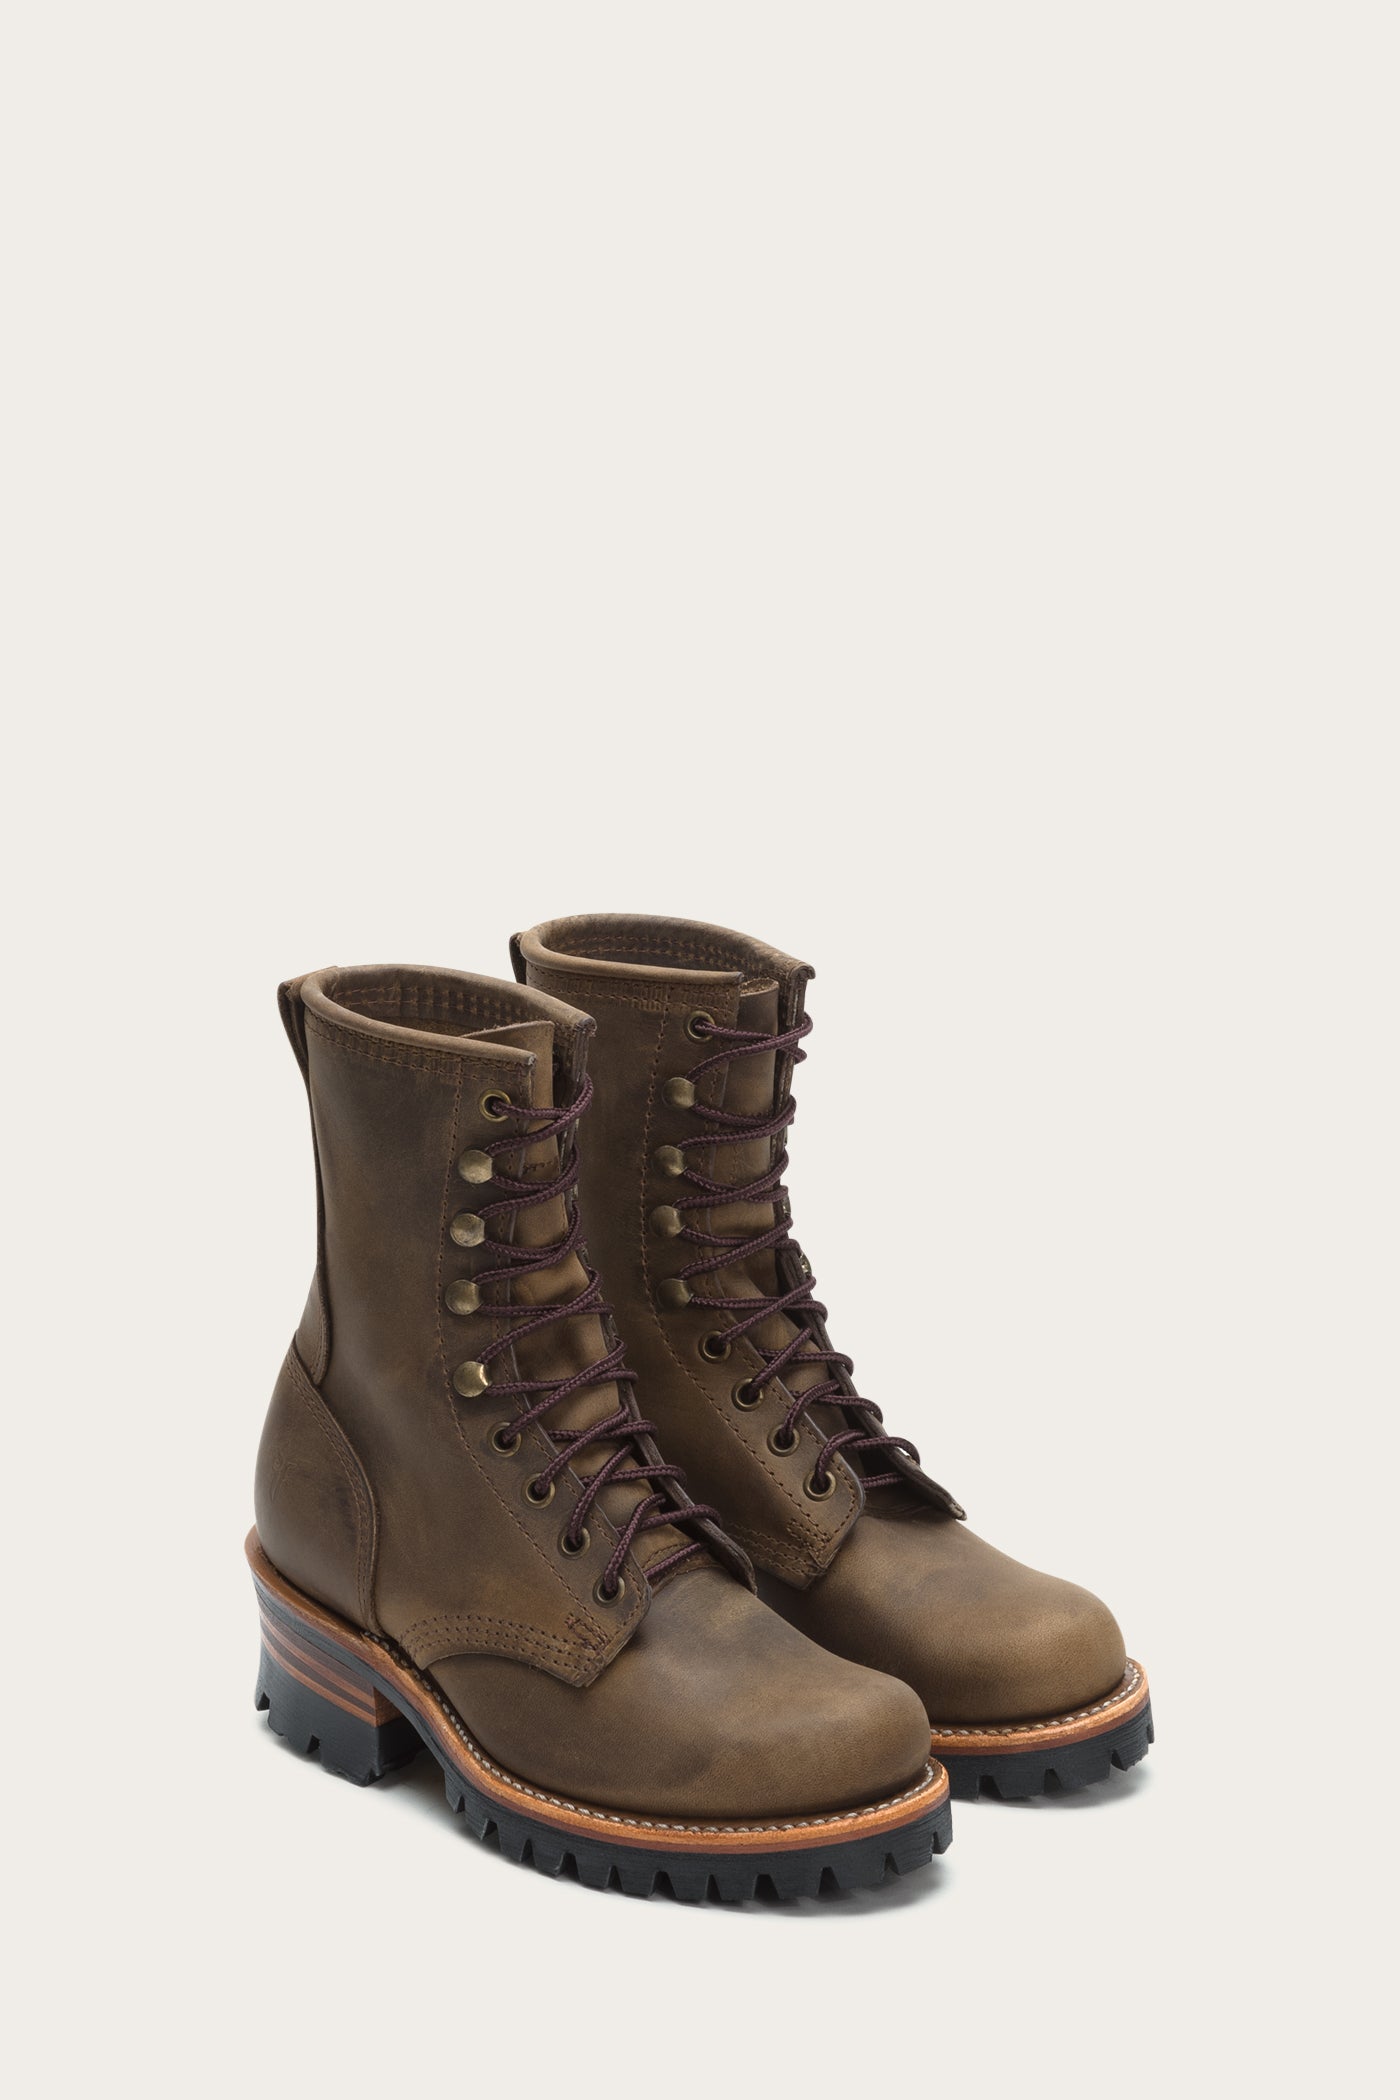 frye men's logger boots